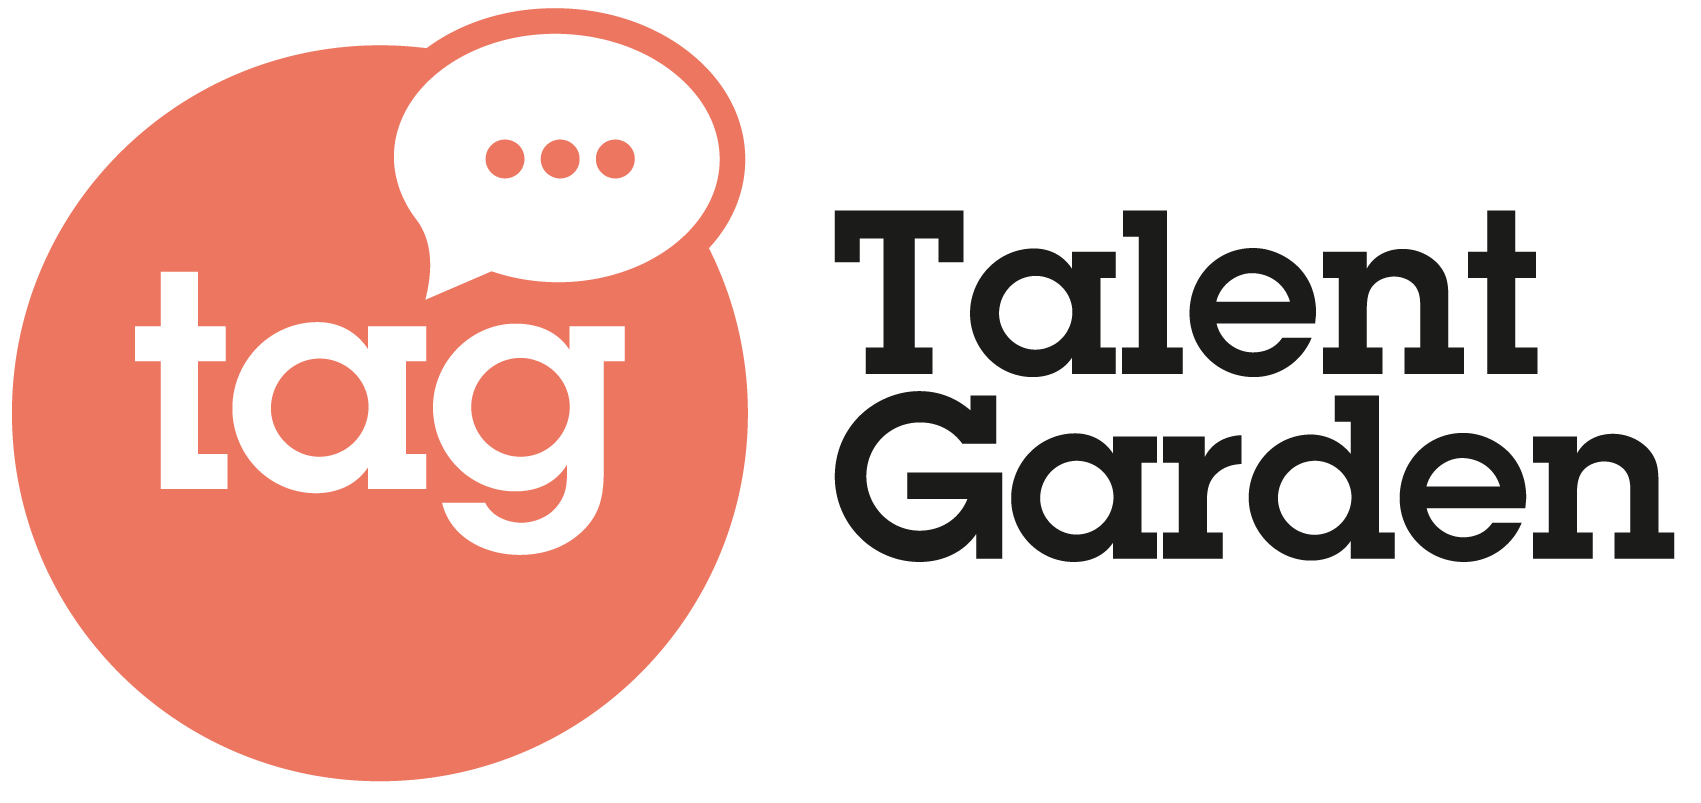 Partnership Talent Garden